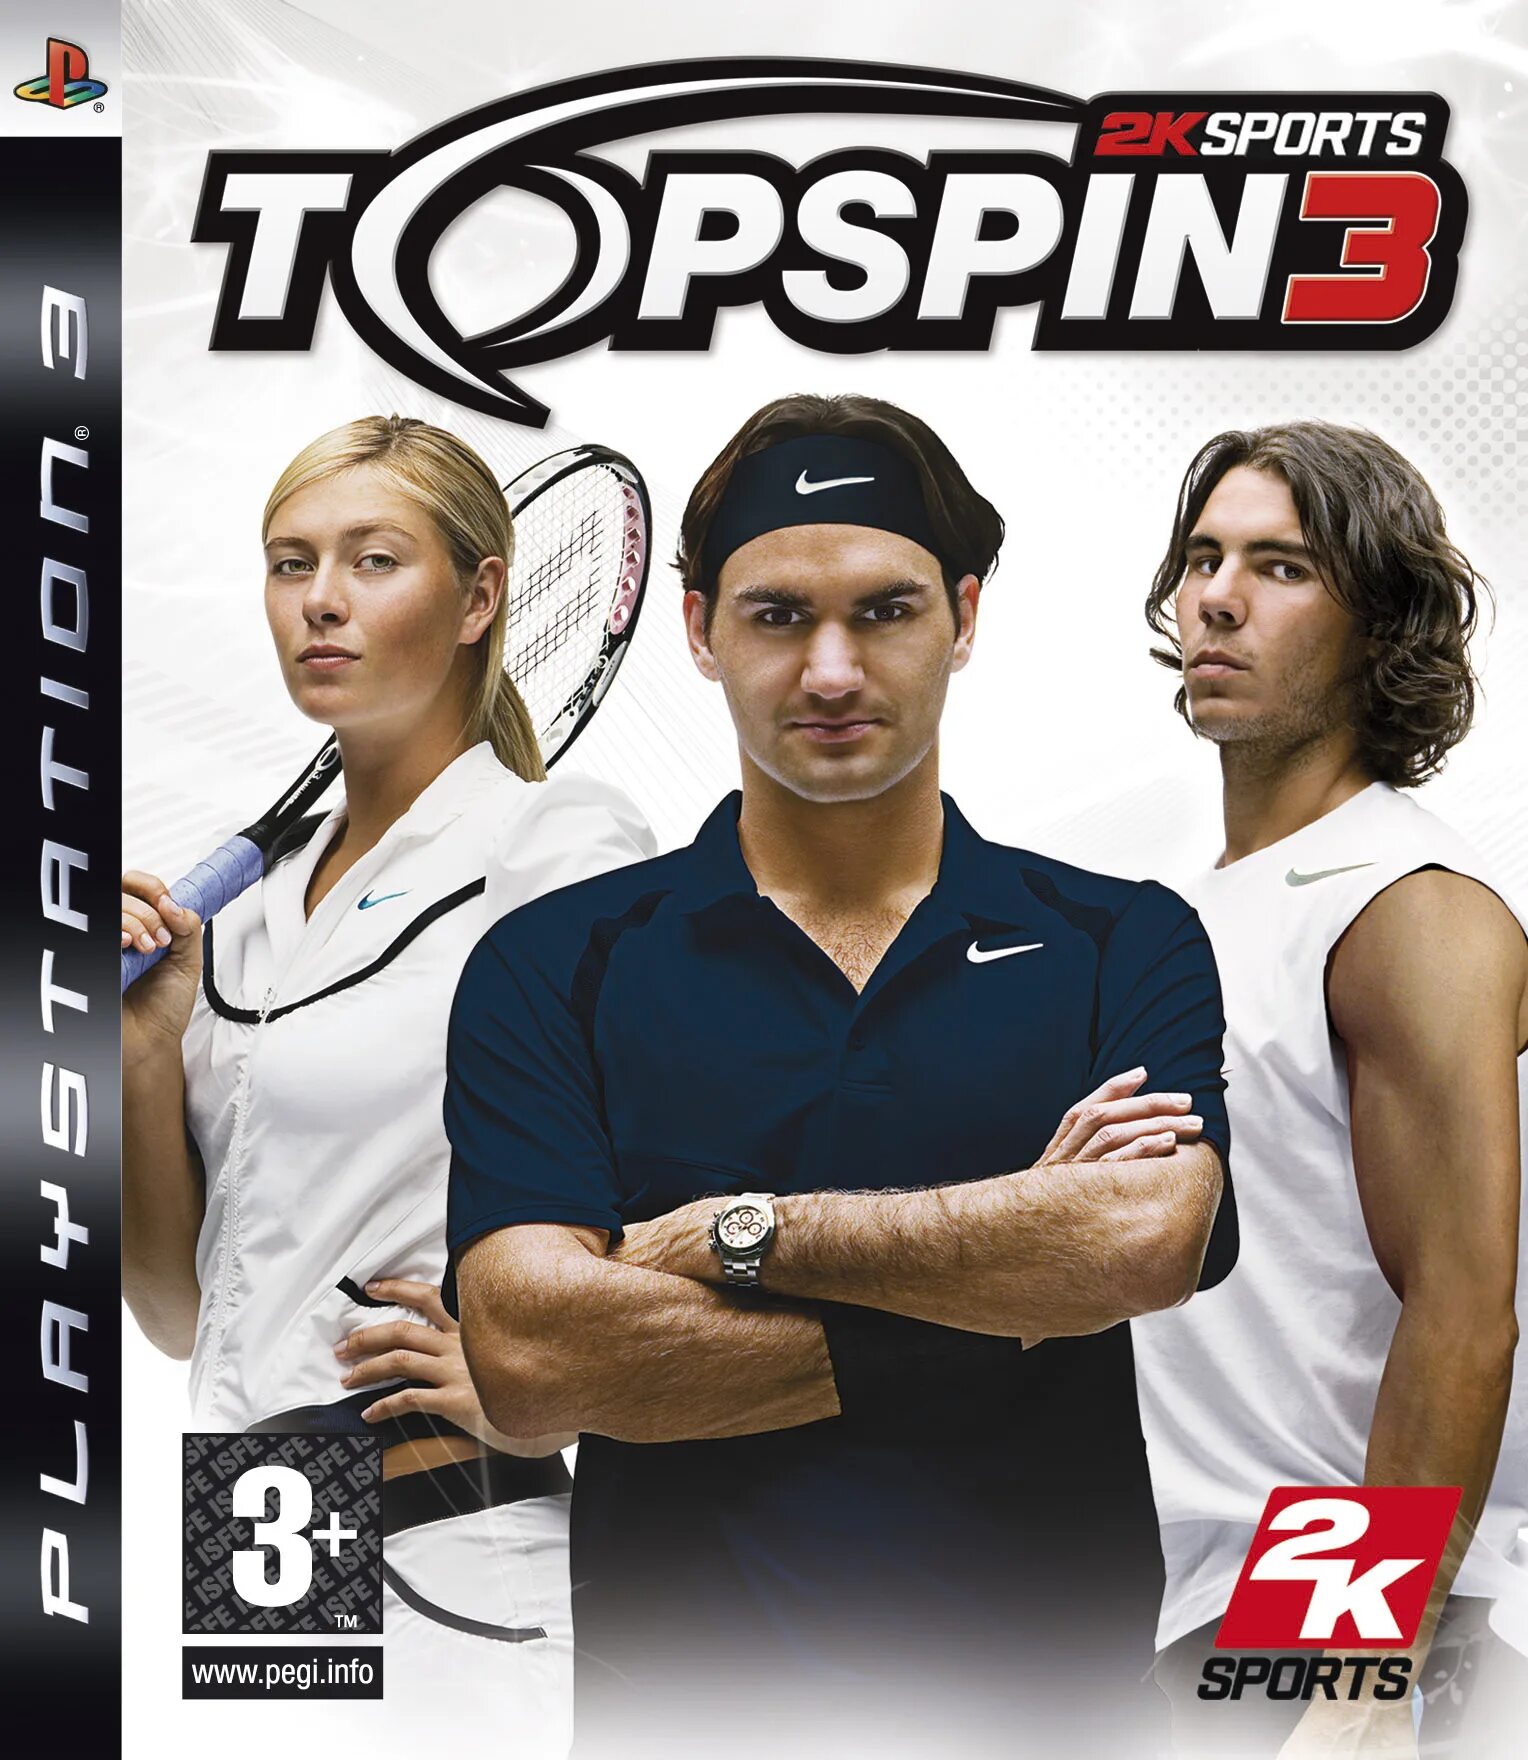 Top Spin 3. Теннис на ps3. Обложка топ спин 3. Game top 3